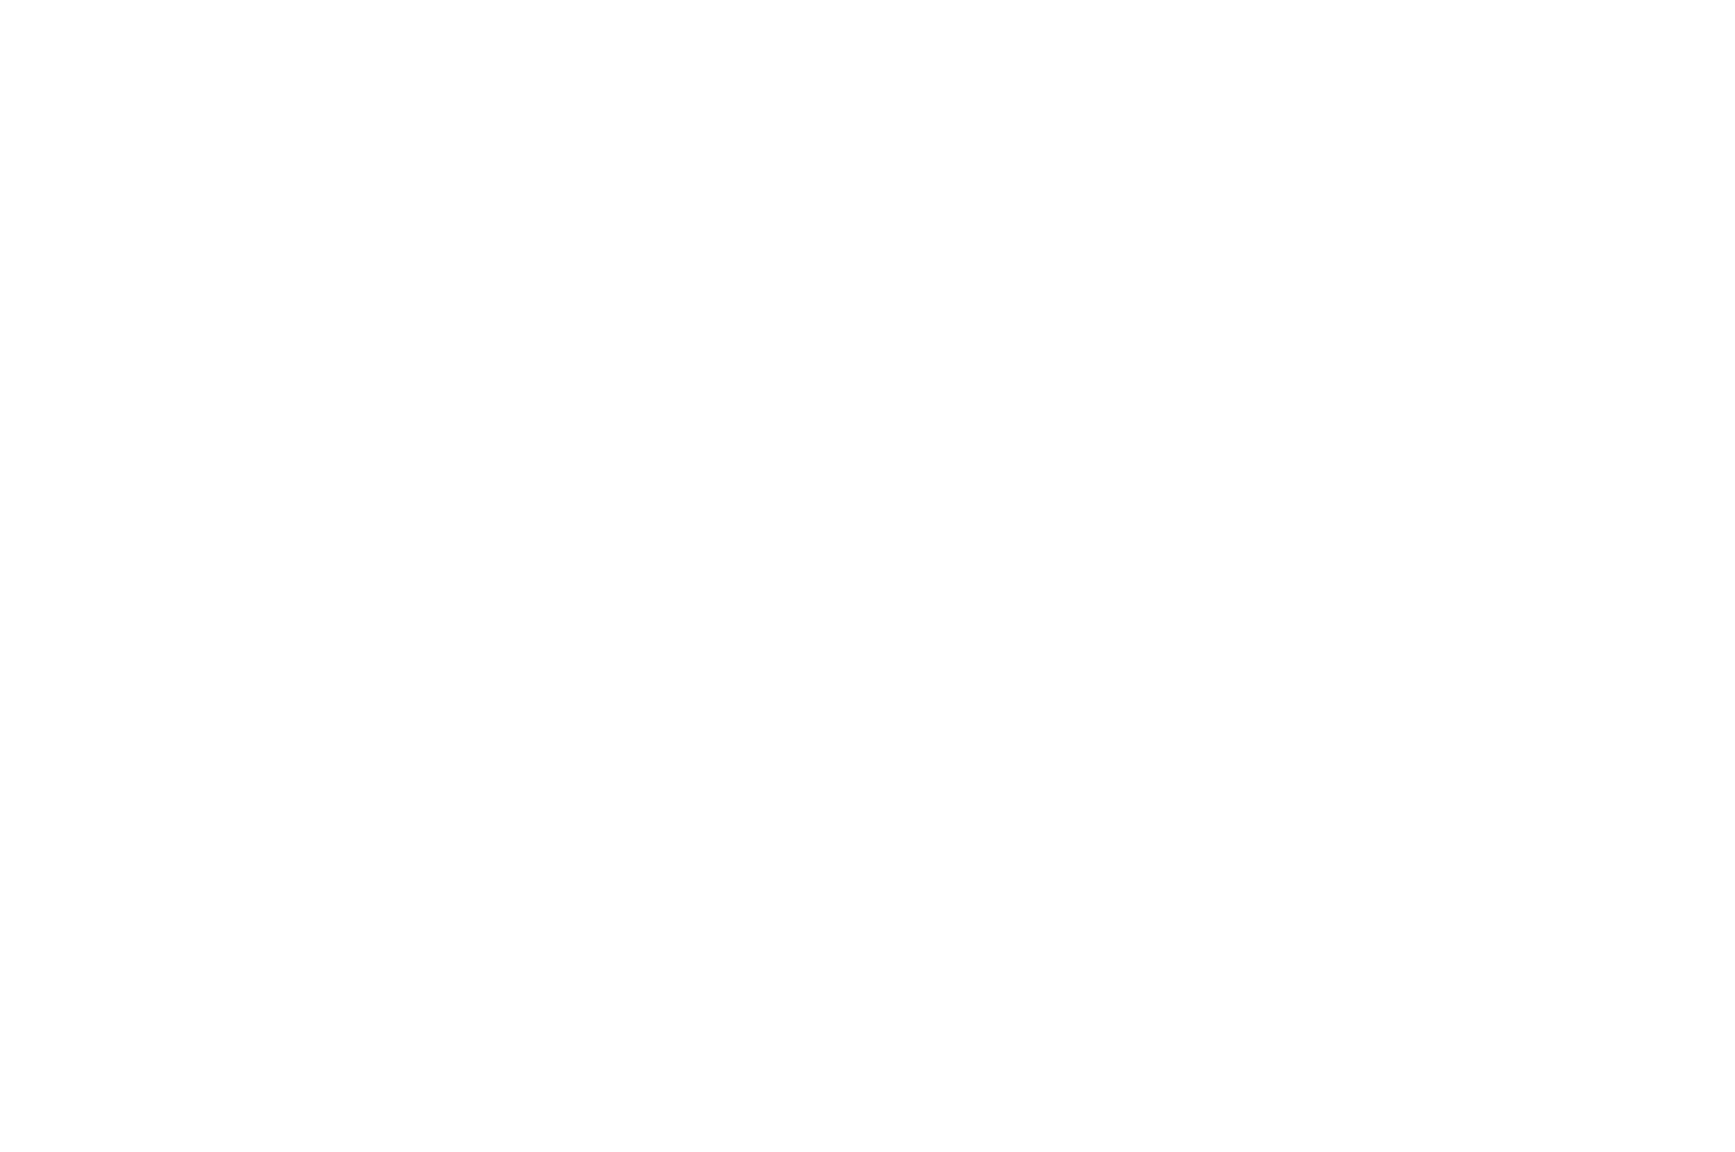 OFFICIAL SELECTION - Sunderland Shorts Film Festival - 2022